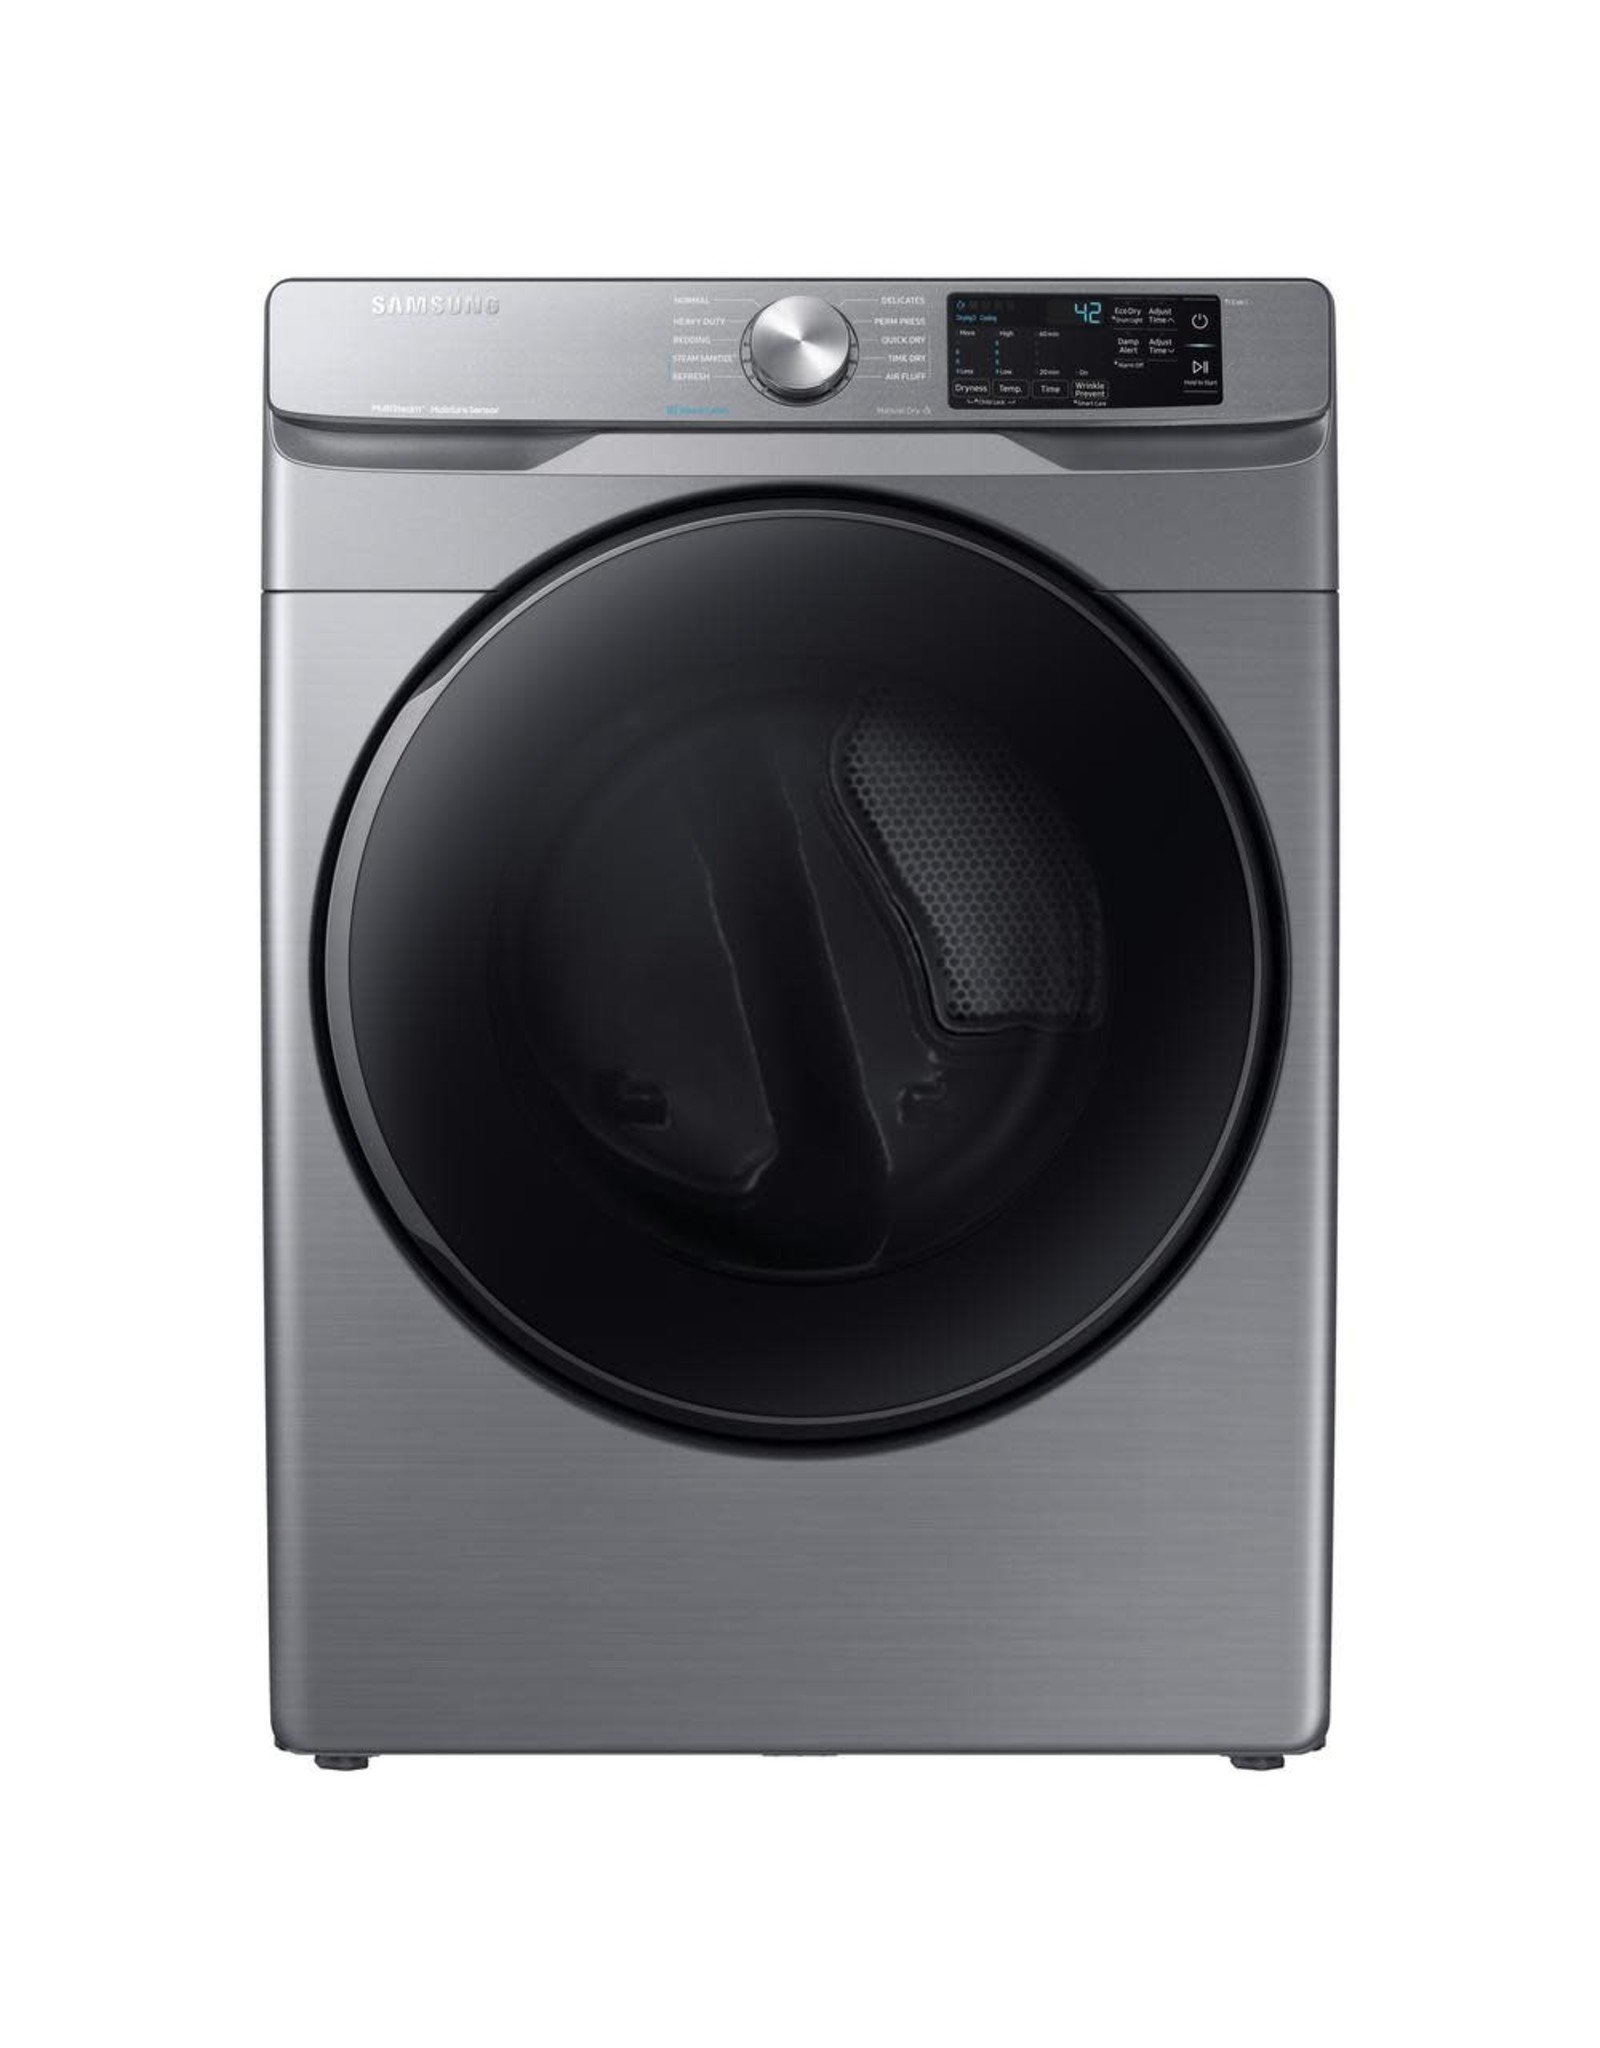 SAMSUNG NEW DVE45R6100P 7.5 cu. ft. Platinum Electric Dryer with Steam